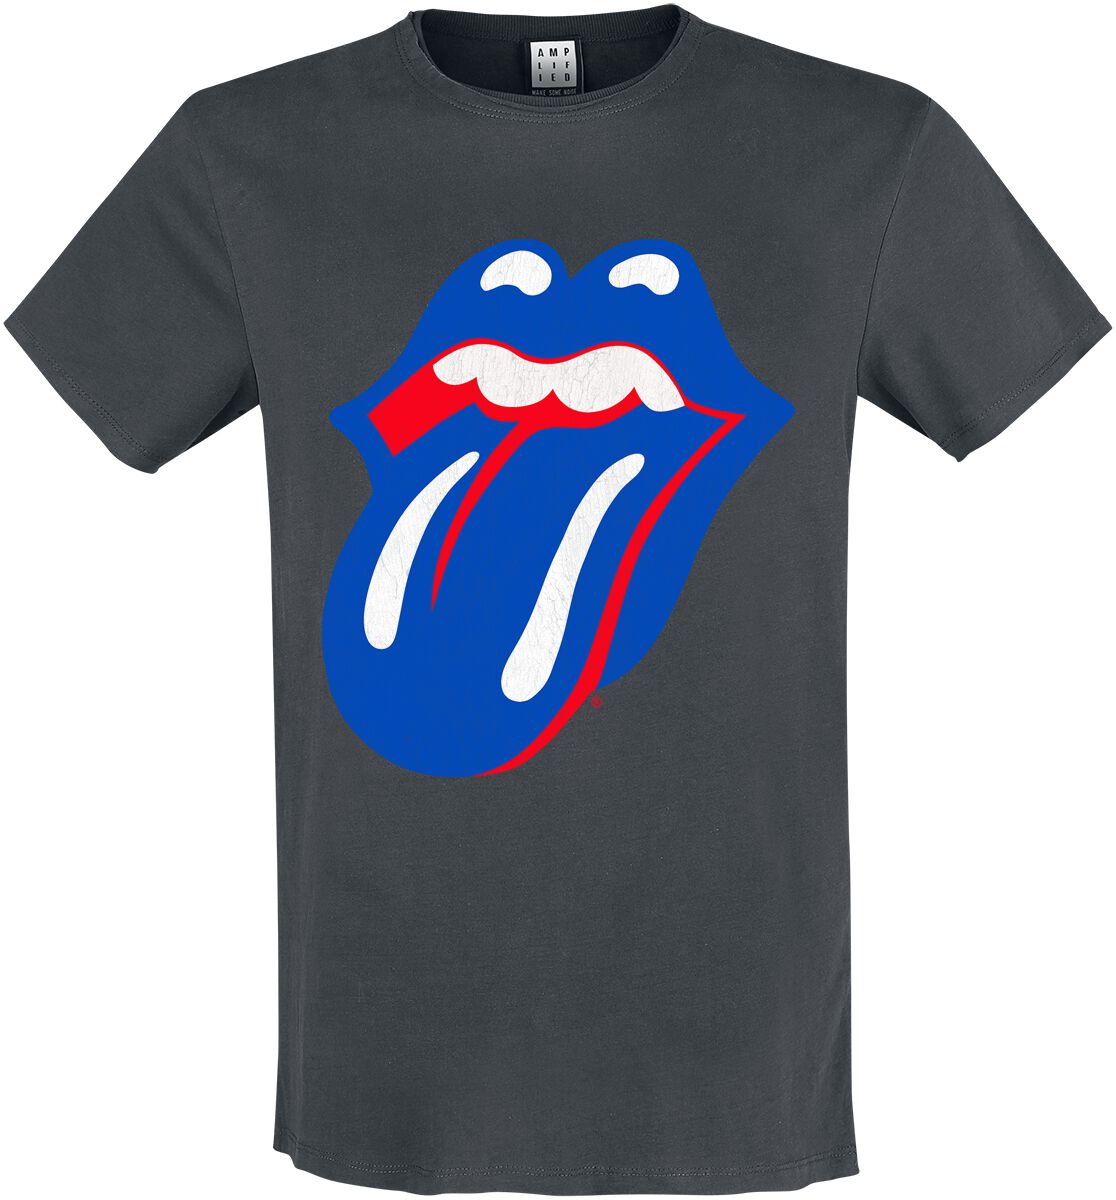 The Rolling Stones T-Shirt - Amplified Collection - Blue & Lonesome - S bis L - für Männer - Größe M - charcoal  - Lizenziertes Merchandise!